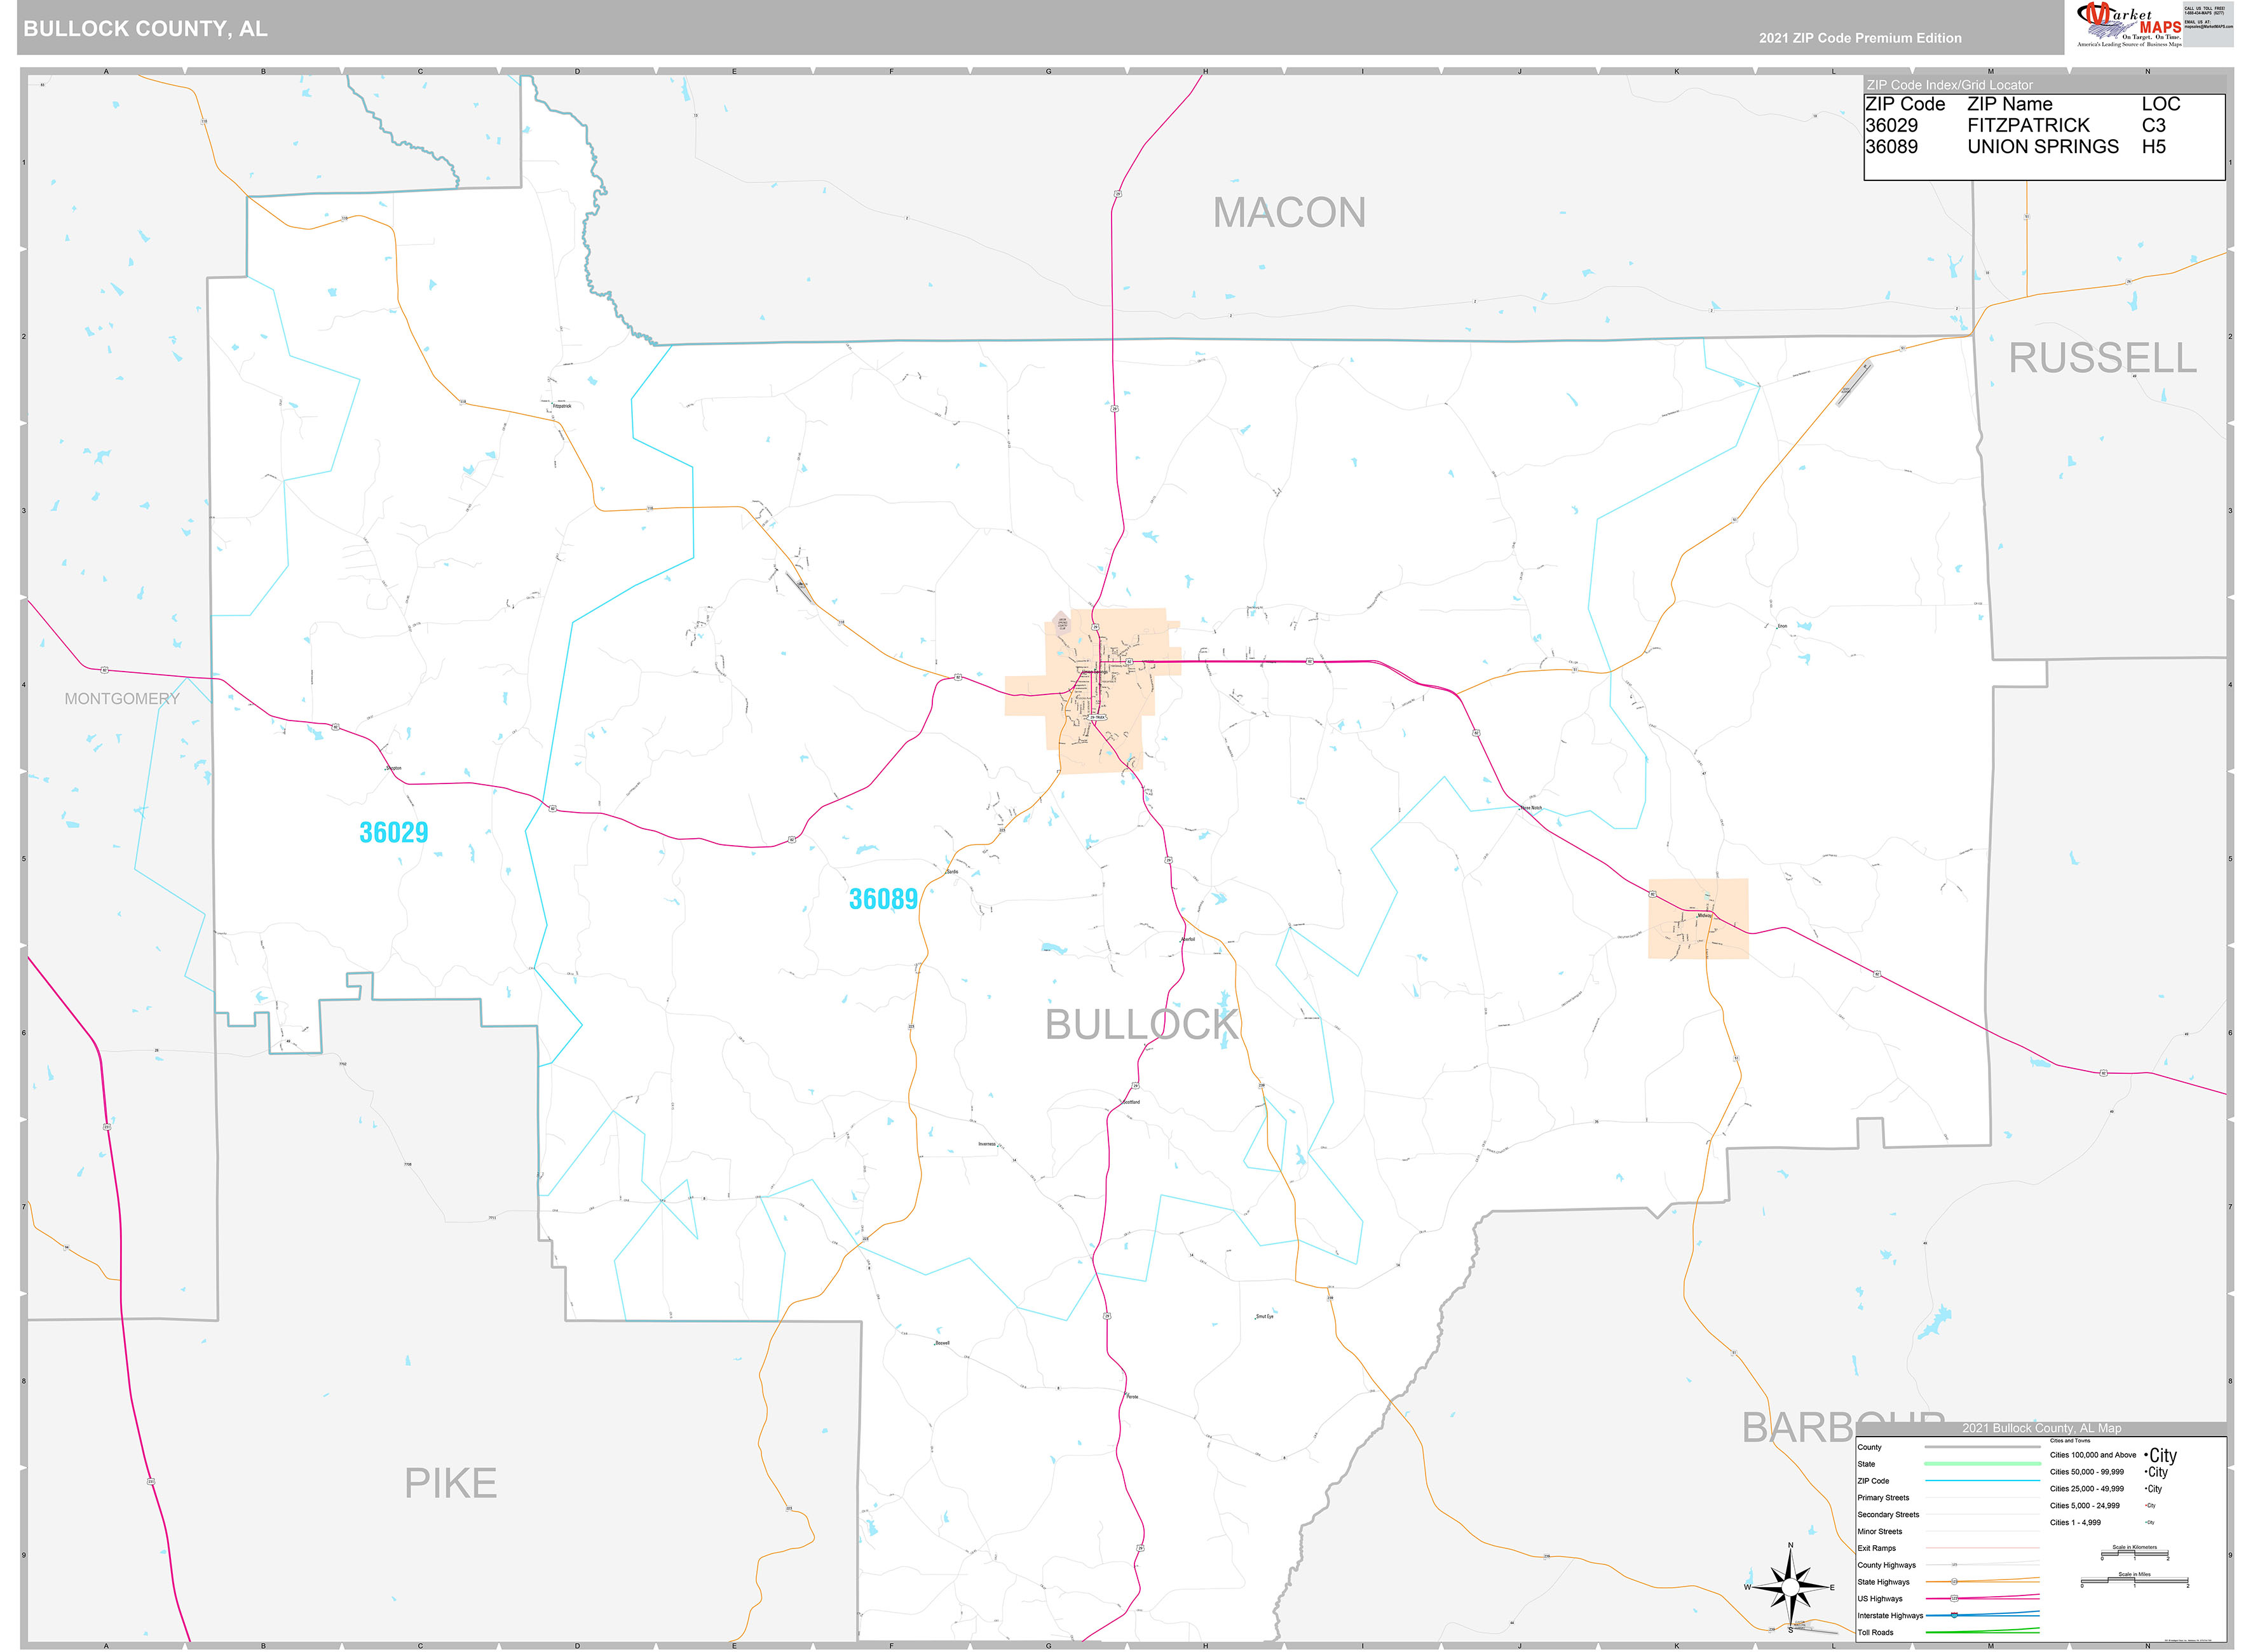 Bullock County Al Wall Map Premium Style By Marketmaps 3693